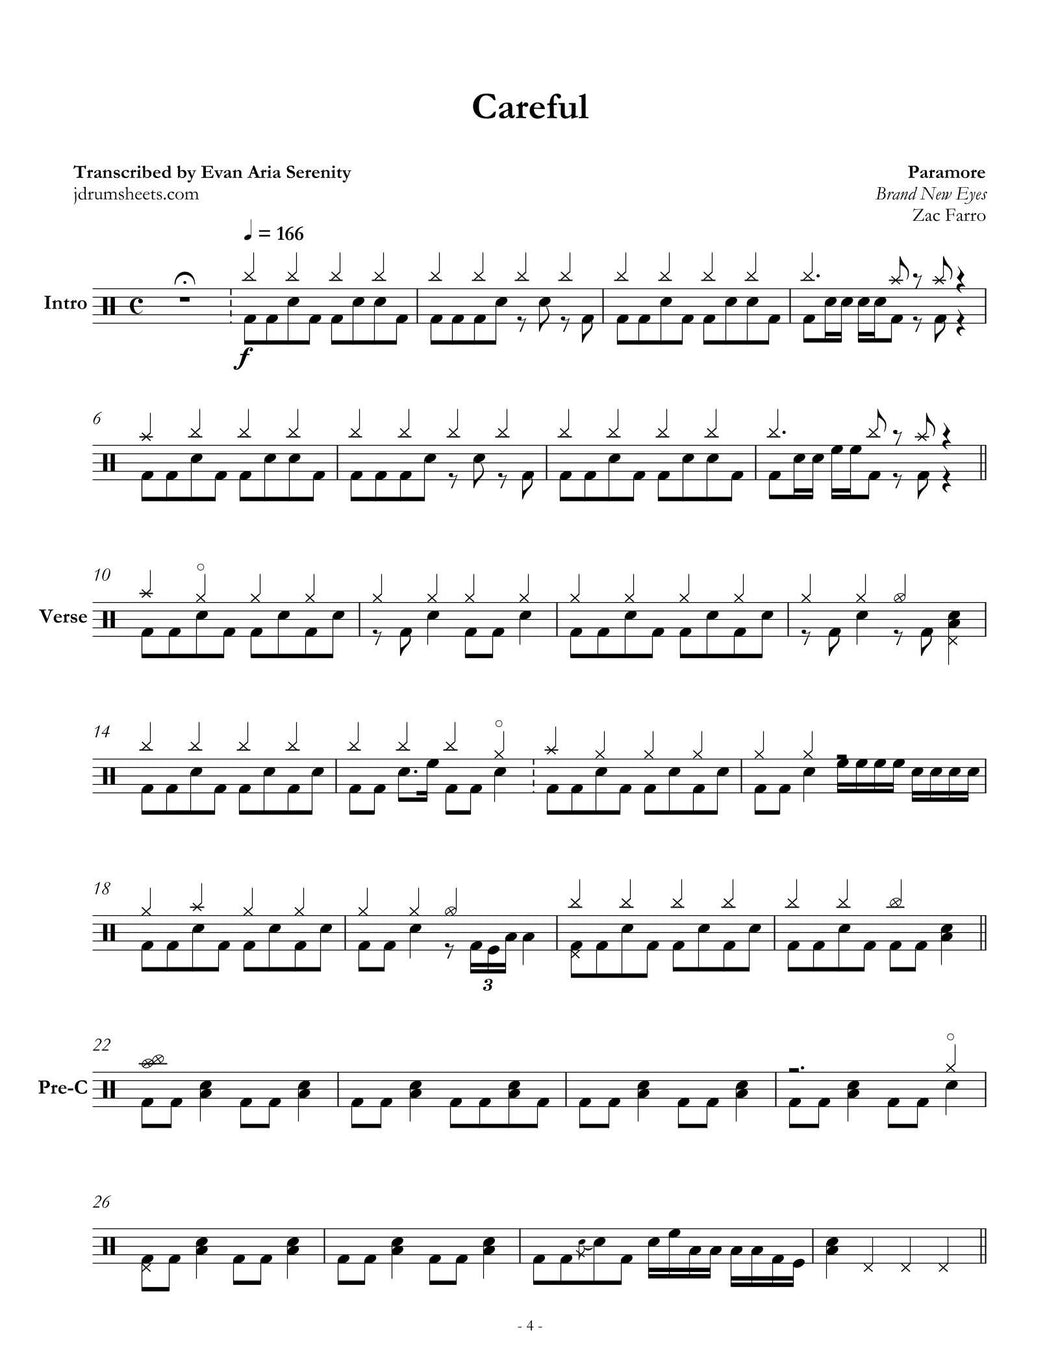 Careful - Paramore - Full Drum Transcription / Drum Sheet Music - Jaslow Drum Sheets